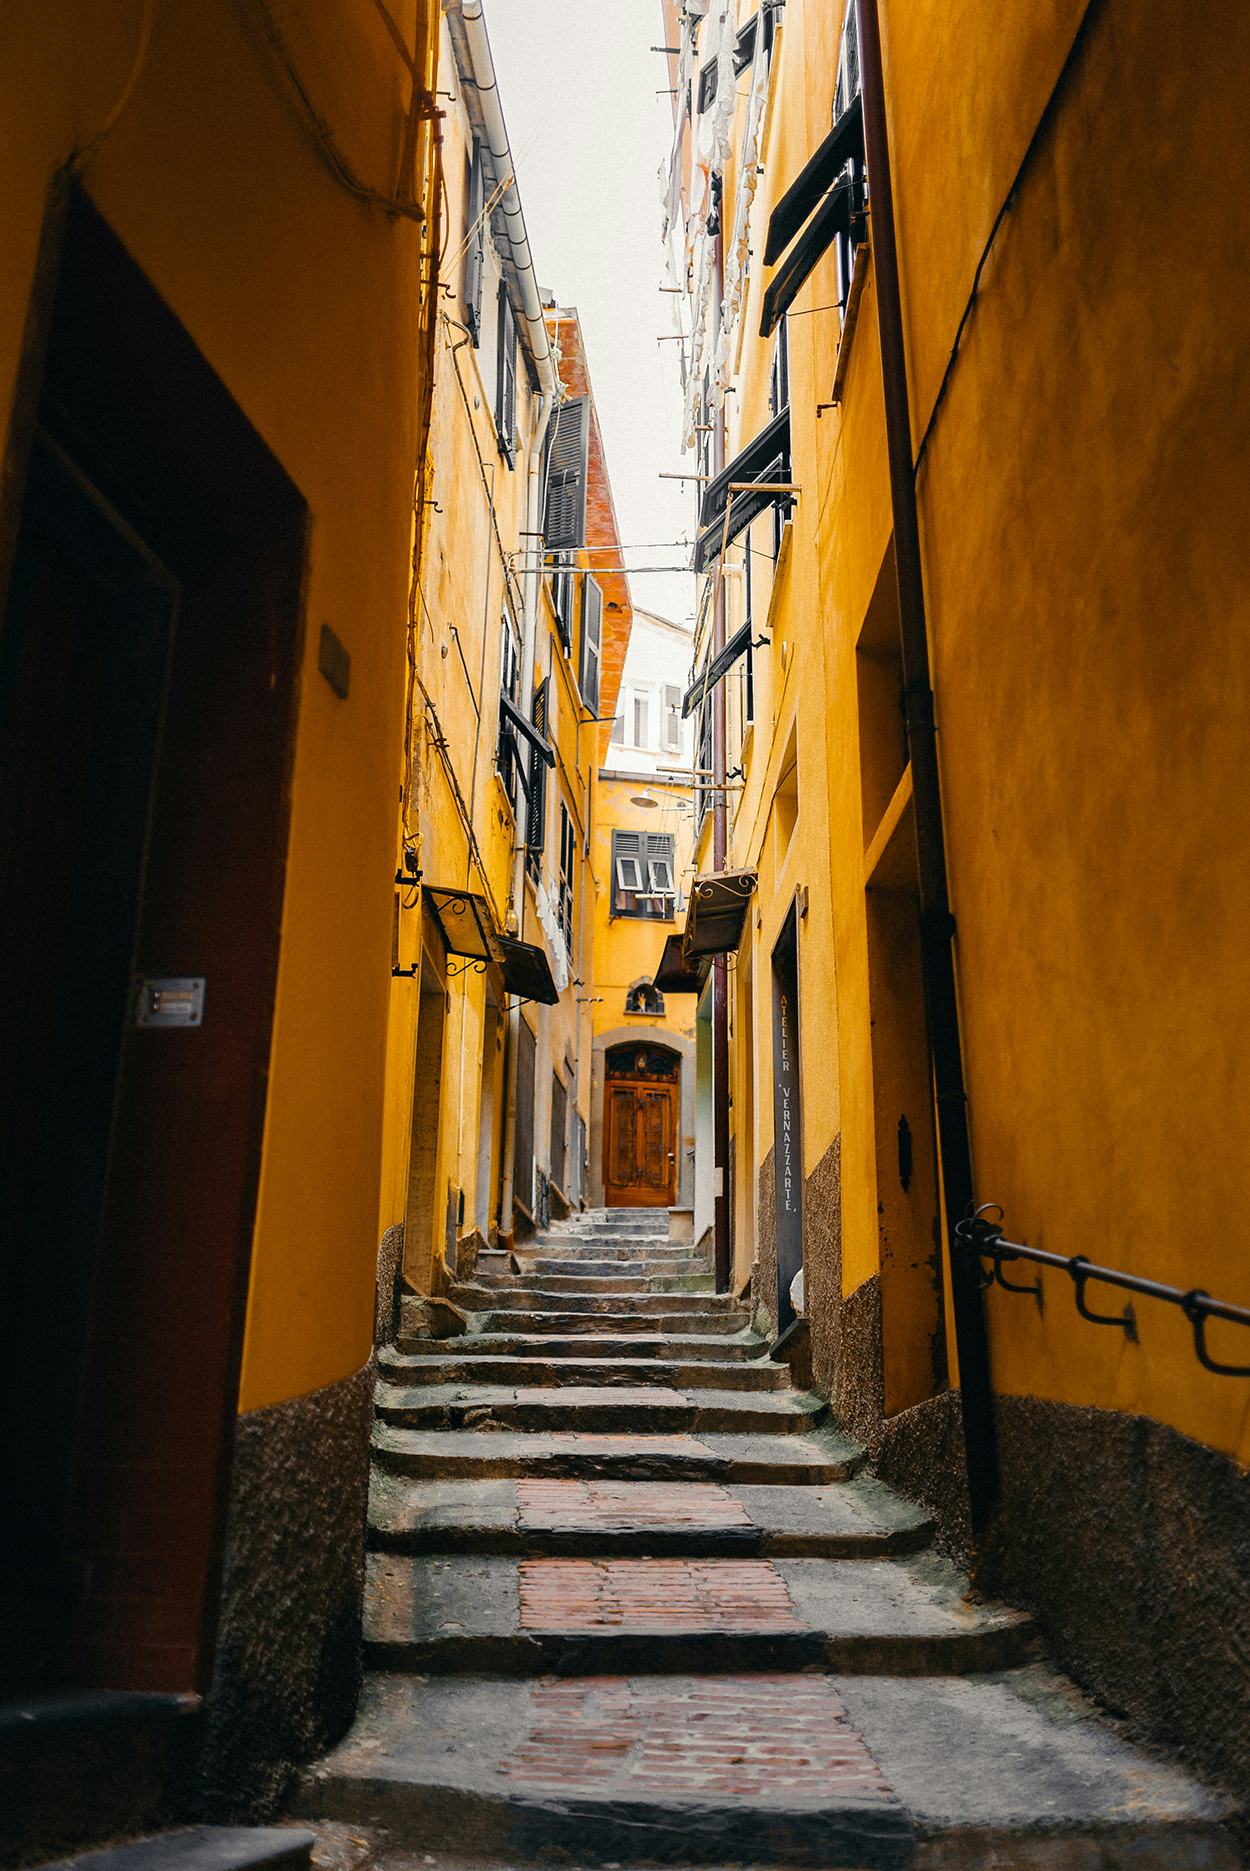 Stairs in Cinque Terre village